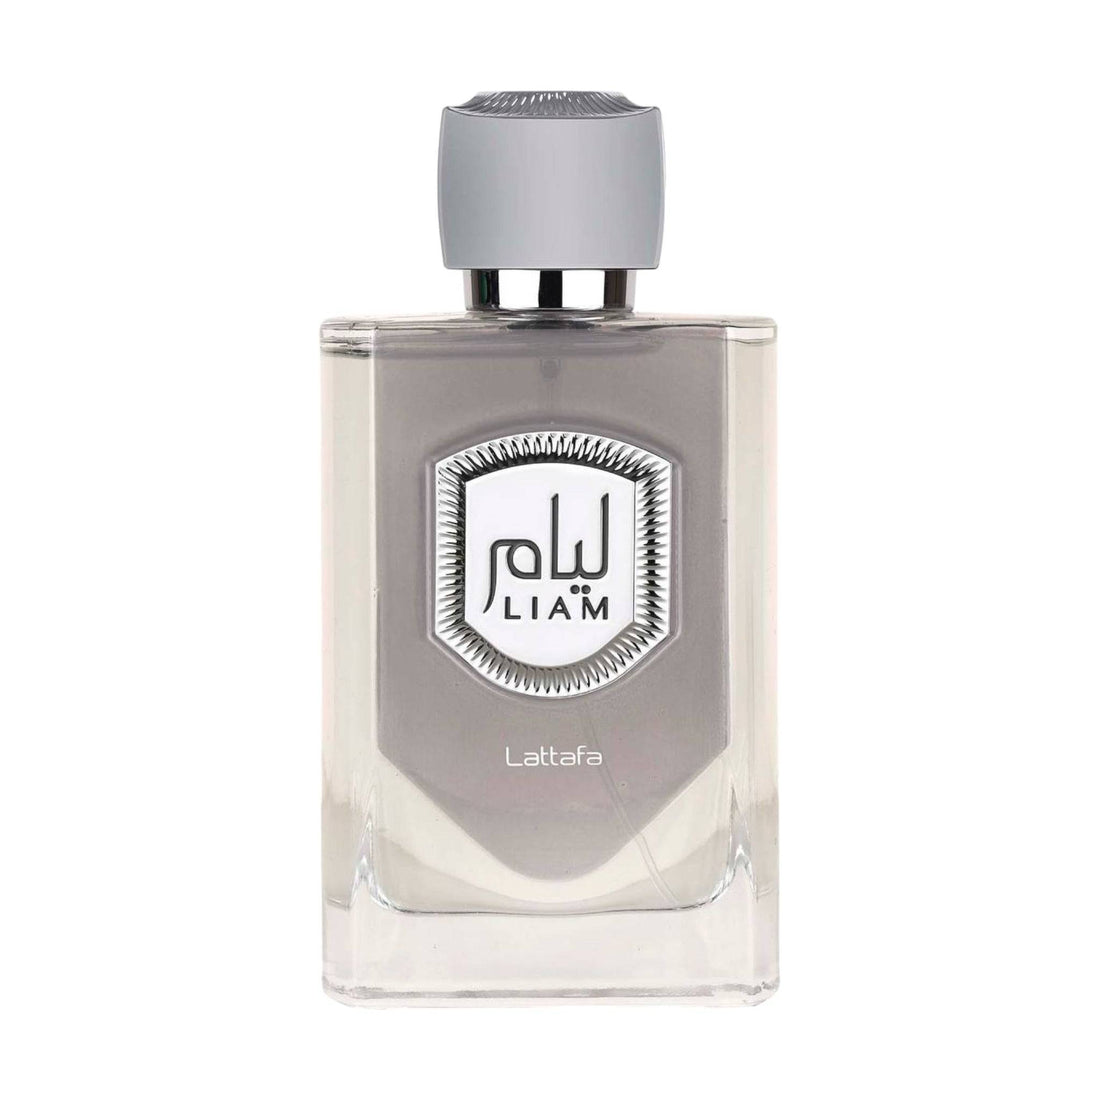 Dynamic bottle of Lattafa Liam Grey Eau de Parfum, representing the energy and determination of the wearer.